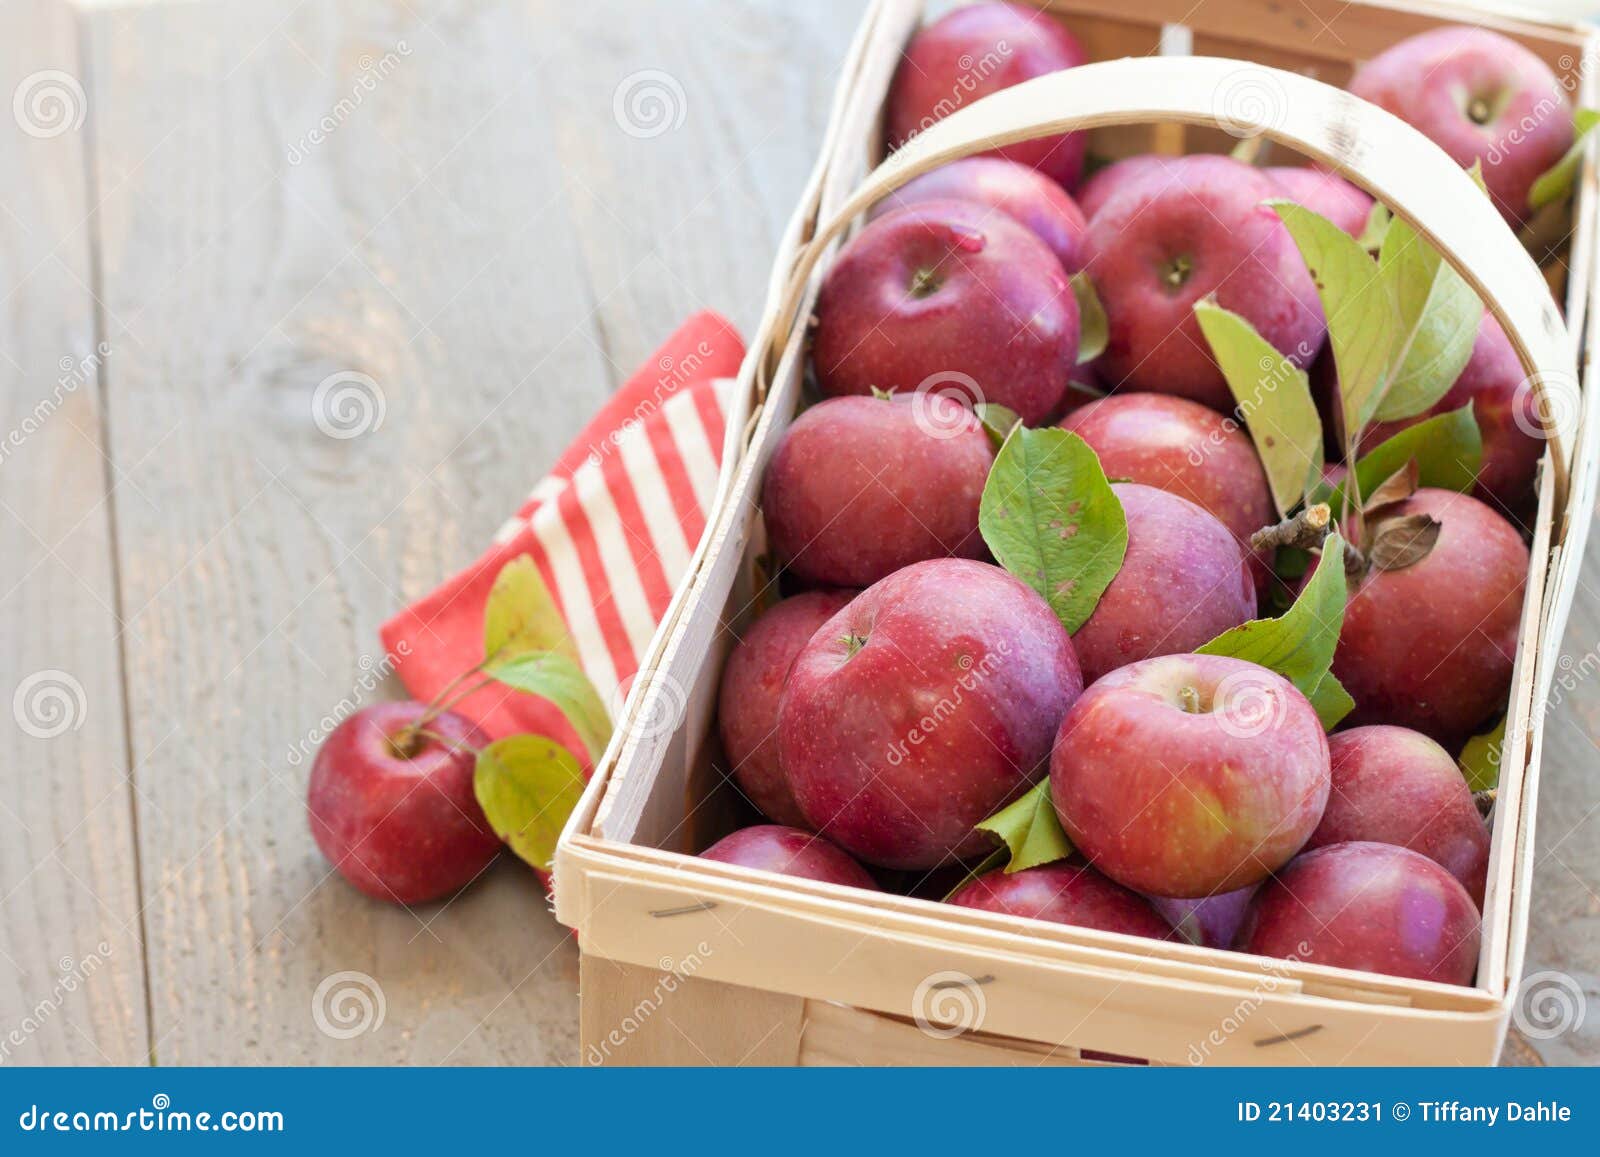 basket of fresh picked apples